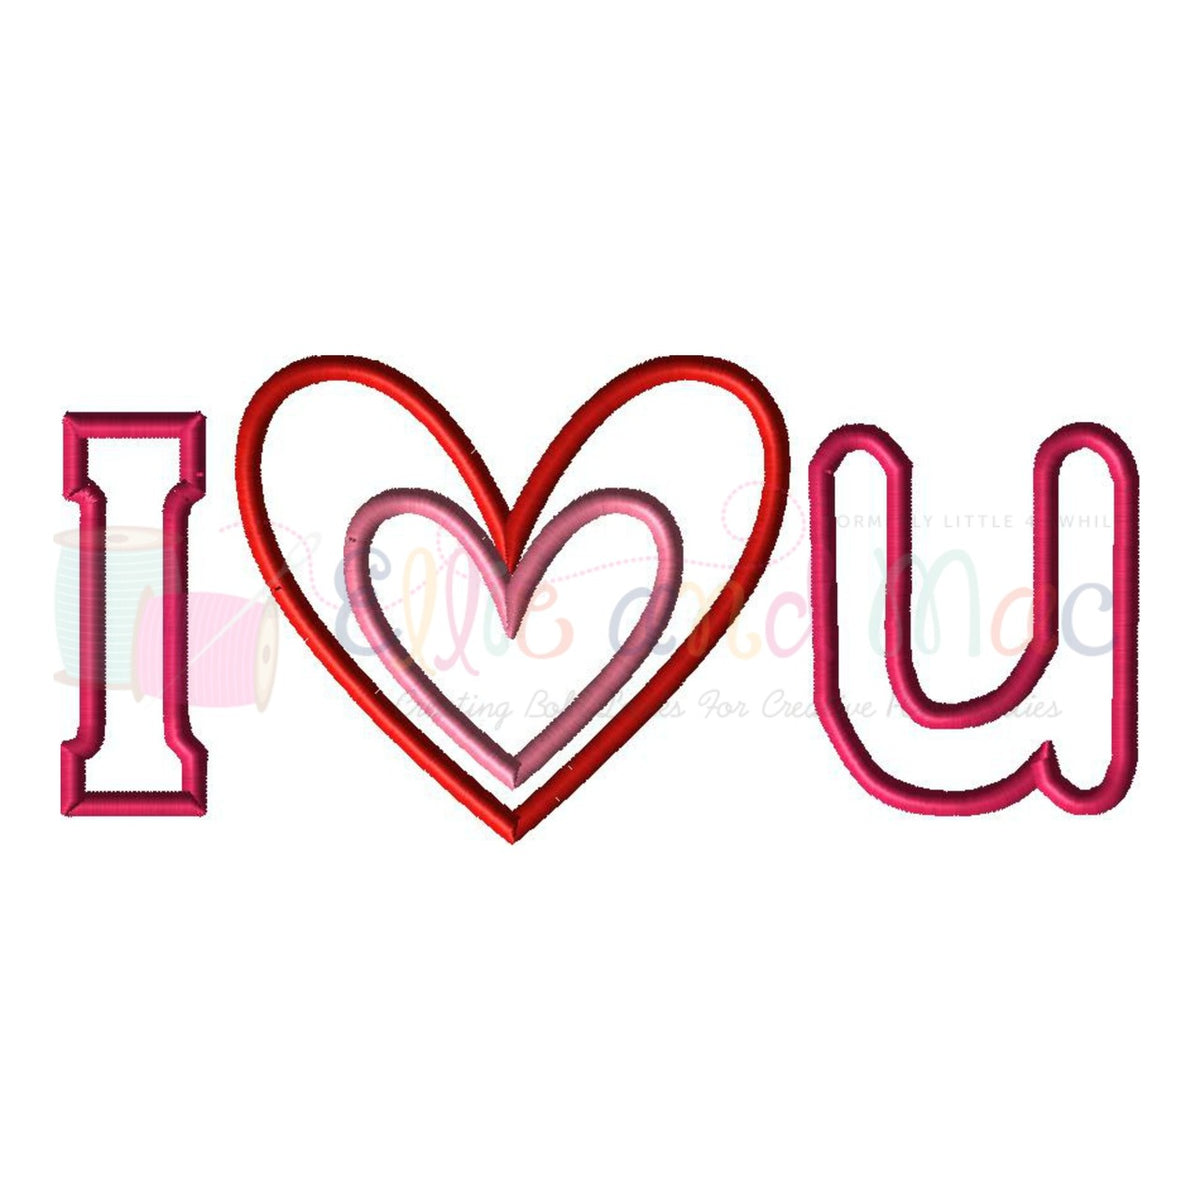 I Heart U Valentine Applique Design